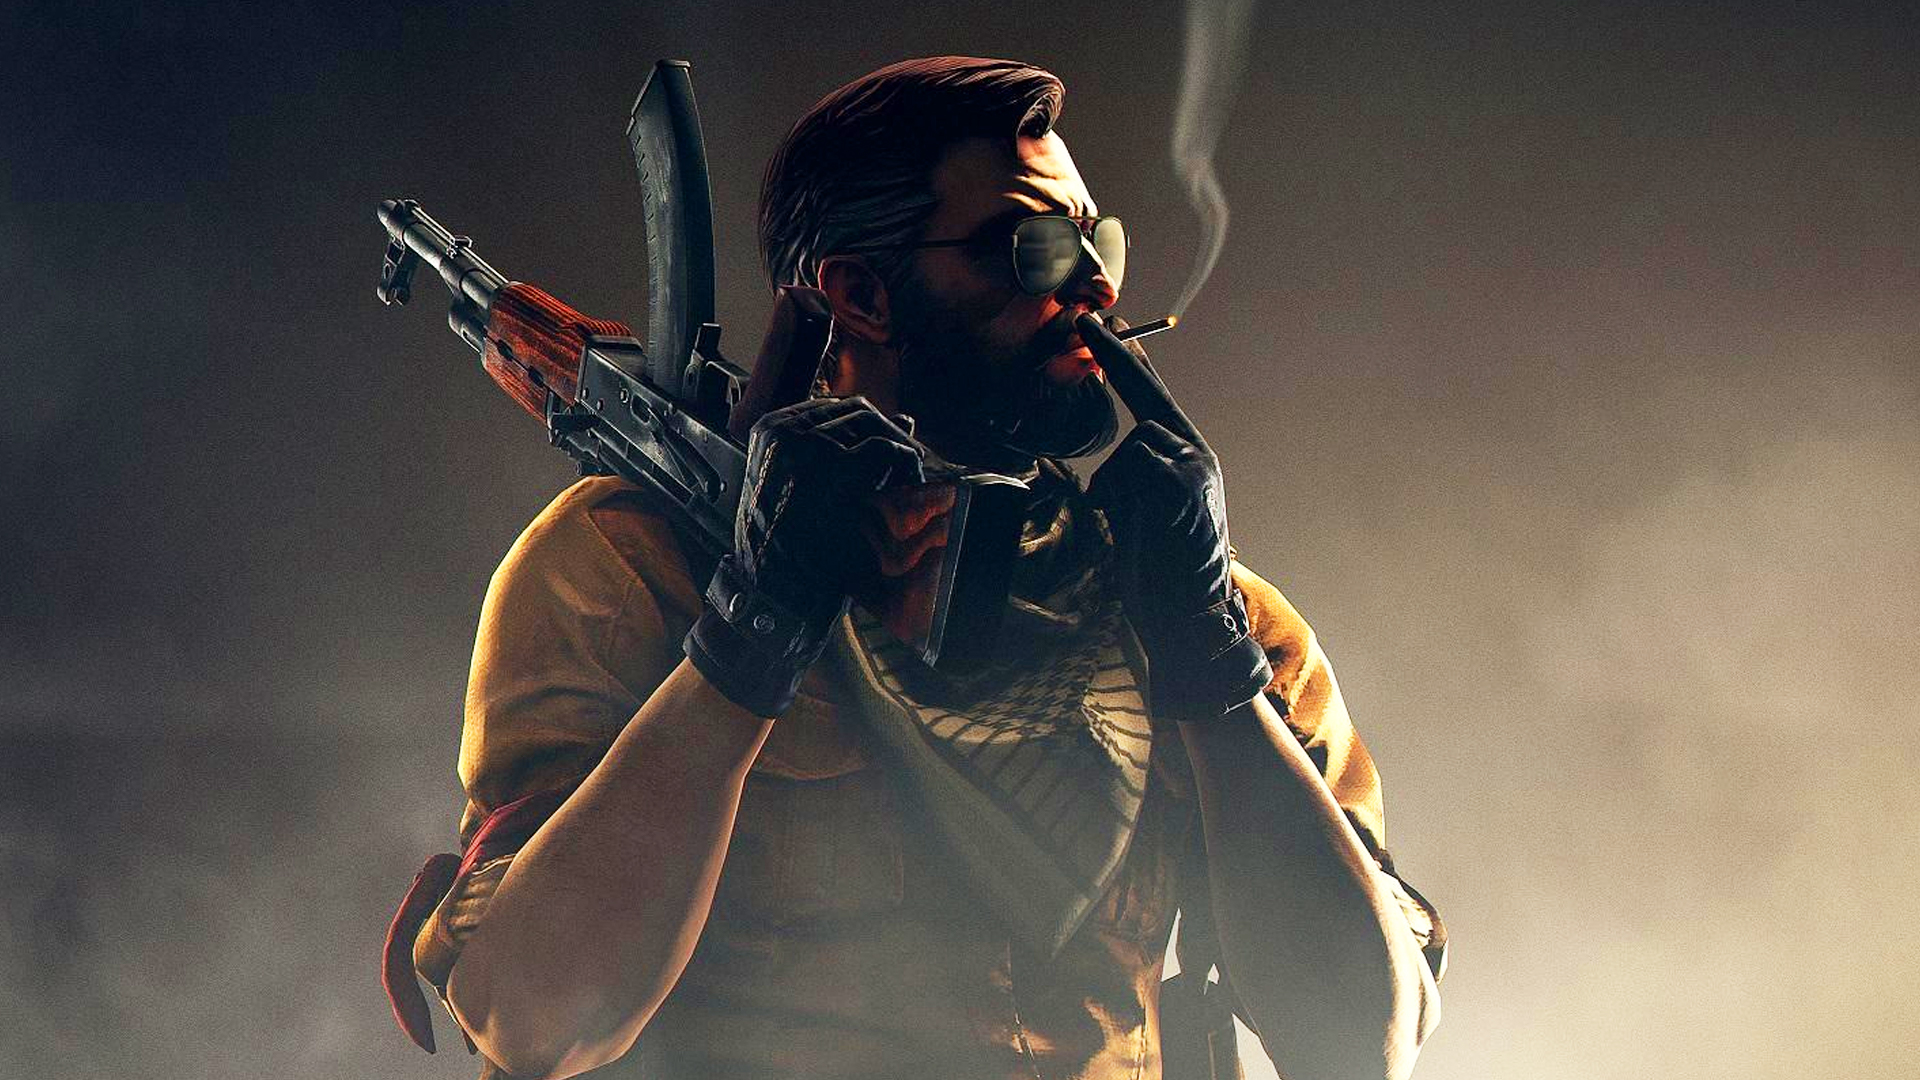 Counter-Strike 2 GREAT on Steam Deck